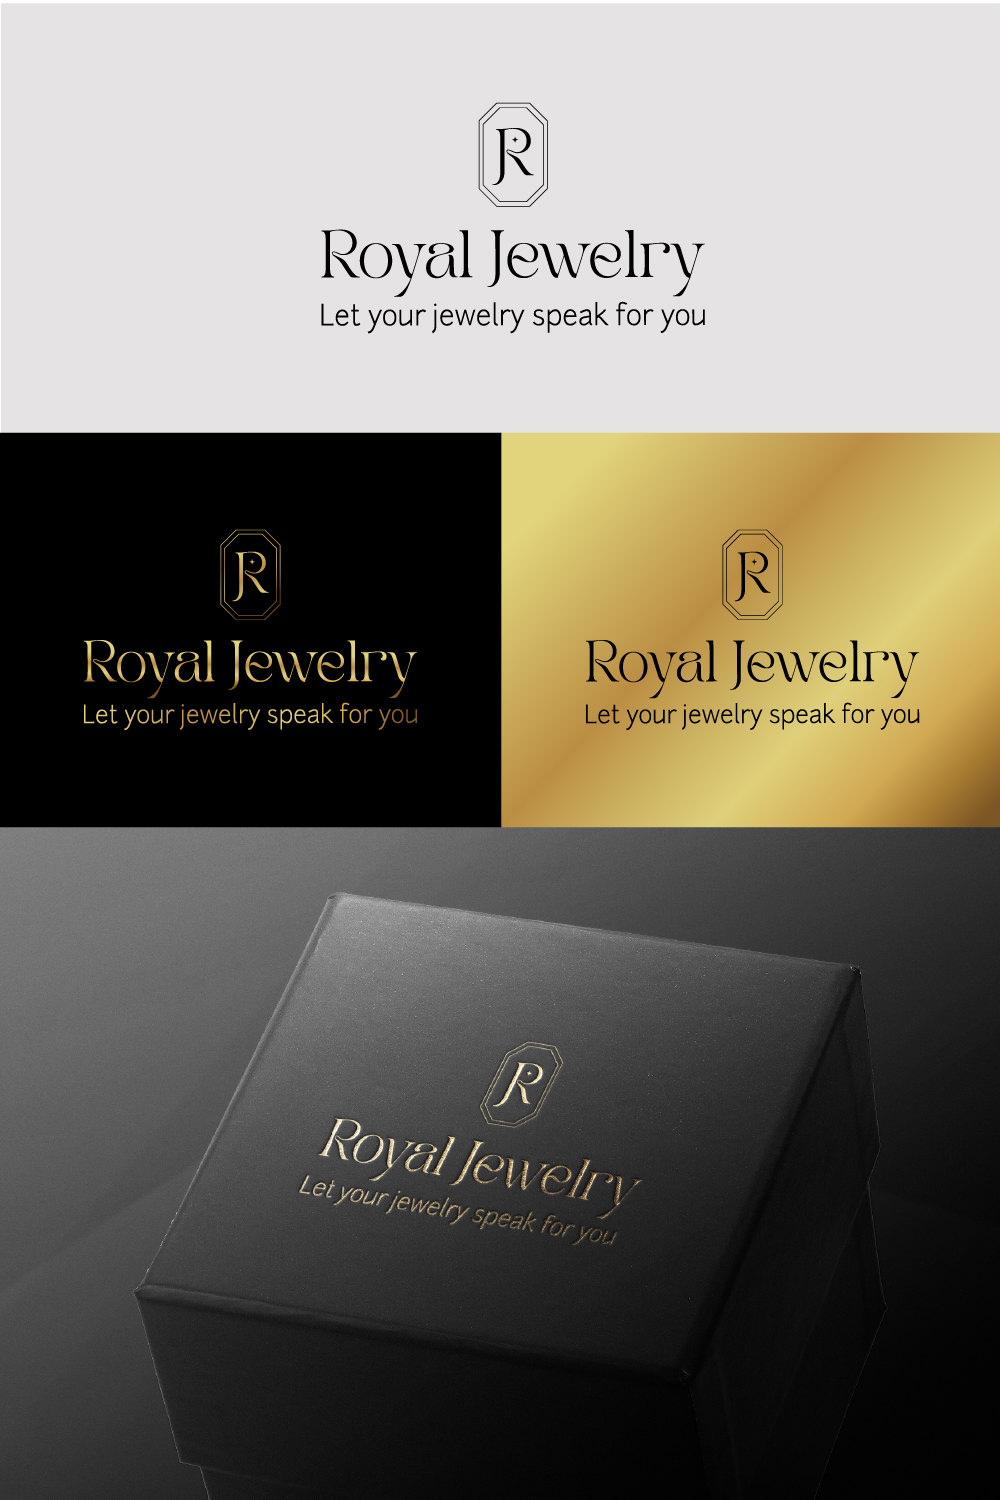 R logo, Jewelry logo, Royal Jewelry logo pinterest preview image.